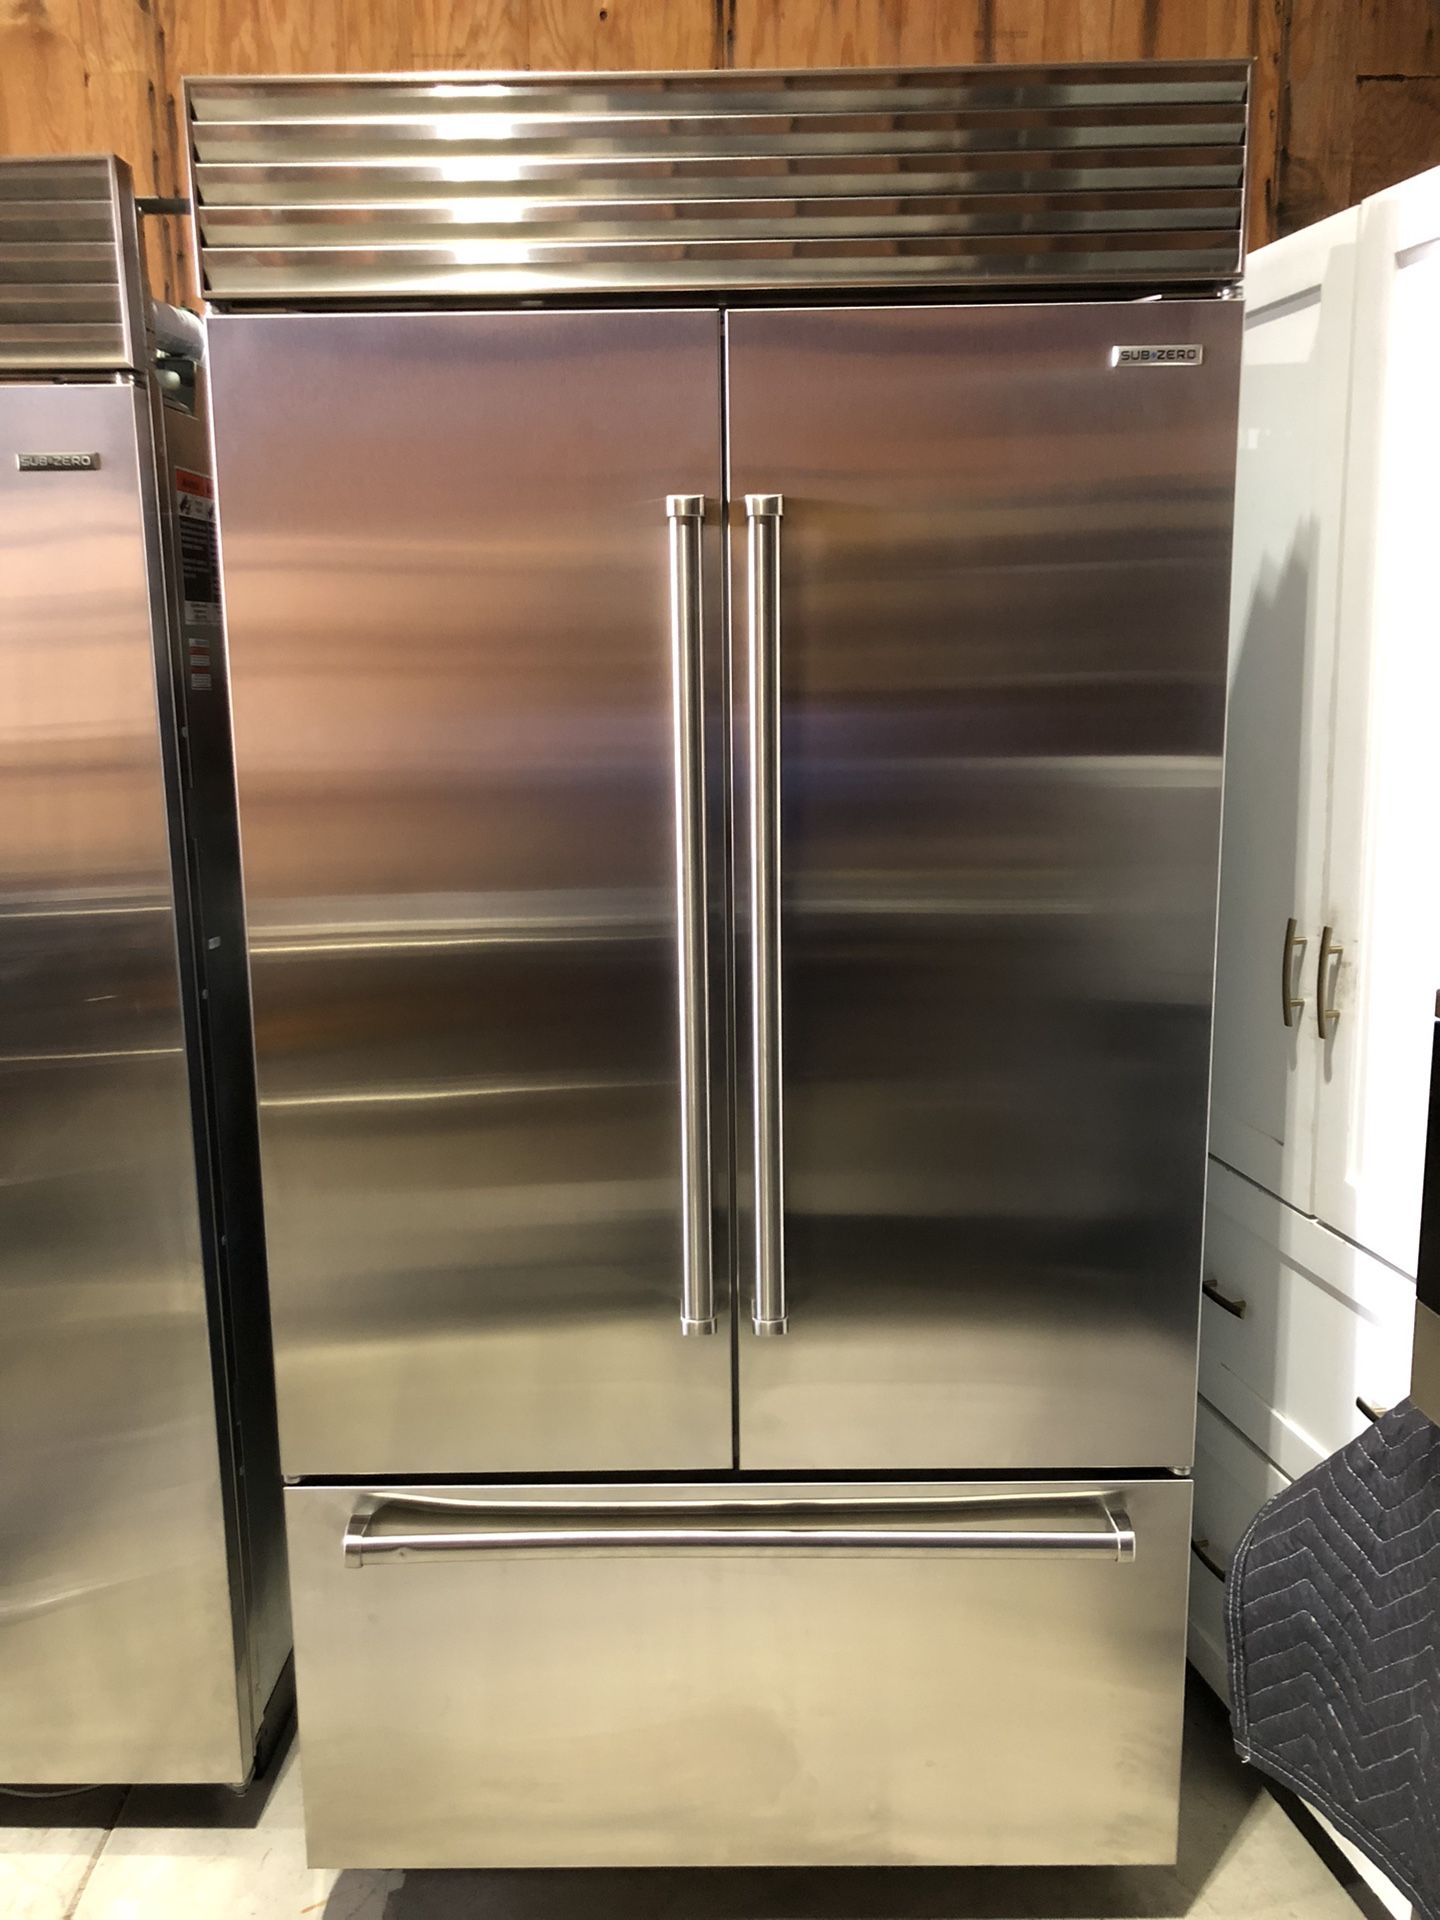 Sub Zero 48” Stainless Steel Built In French Door Refrigerator 